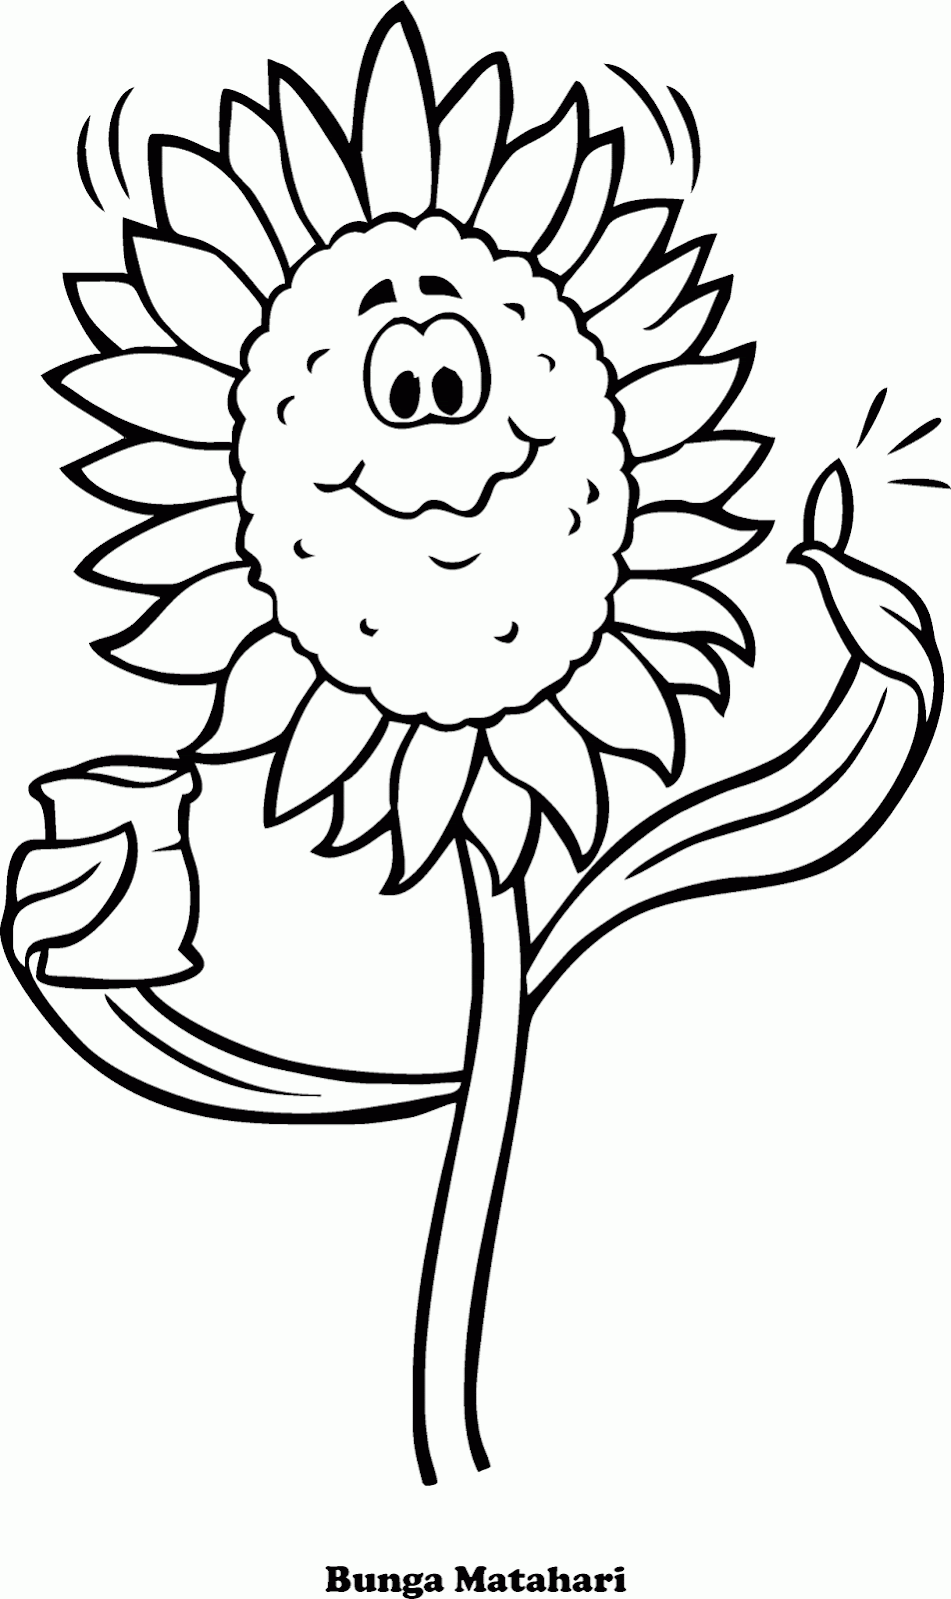 Mewarnai Gambar Bunga Matahari Versi Kartun - Contoh Anak PAUD